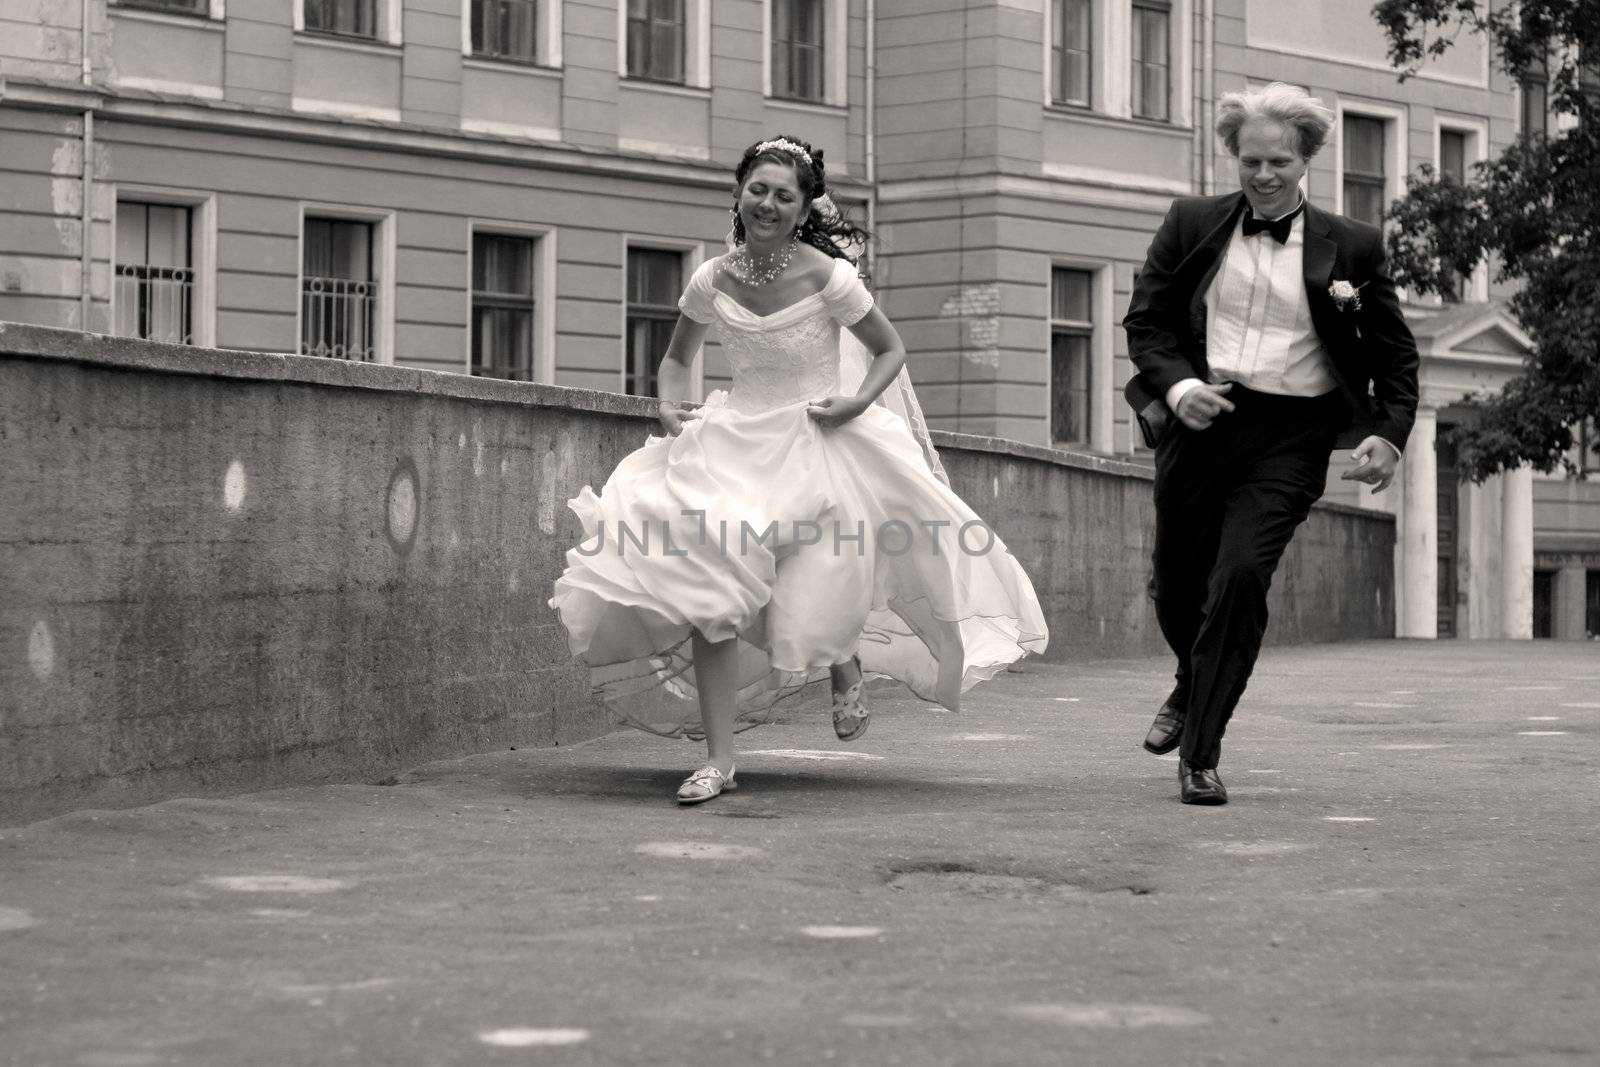 ritual hurdle-race for just married pair, Riga, Latvia